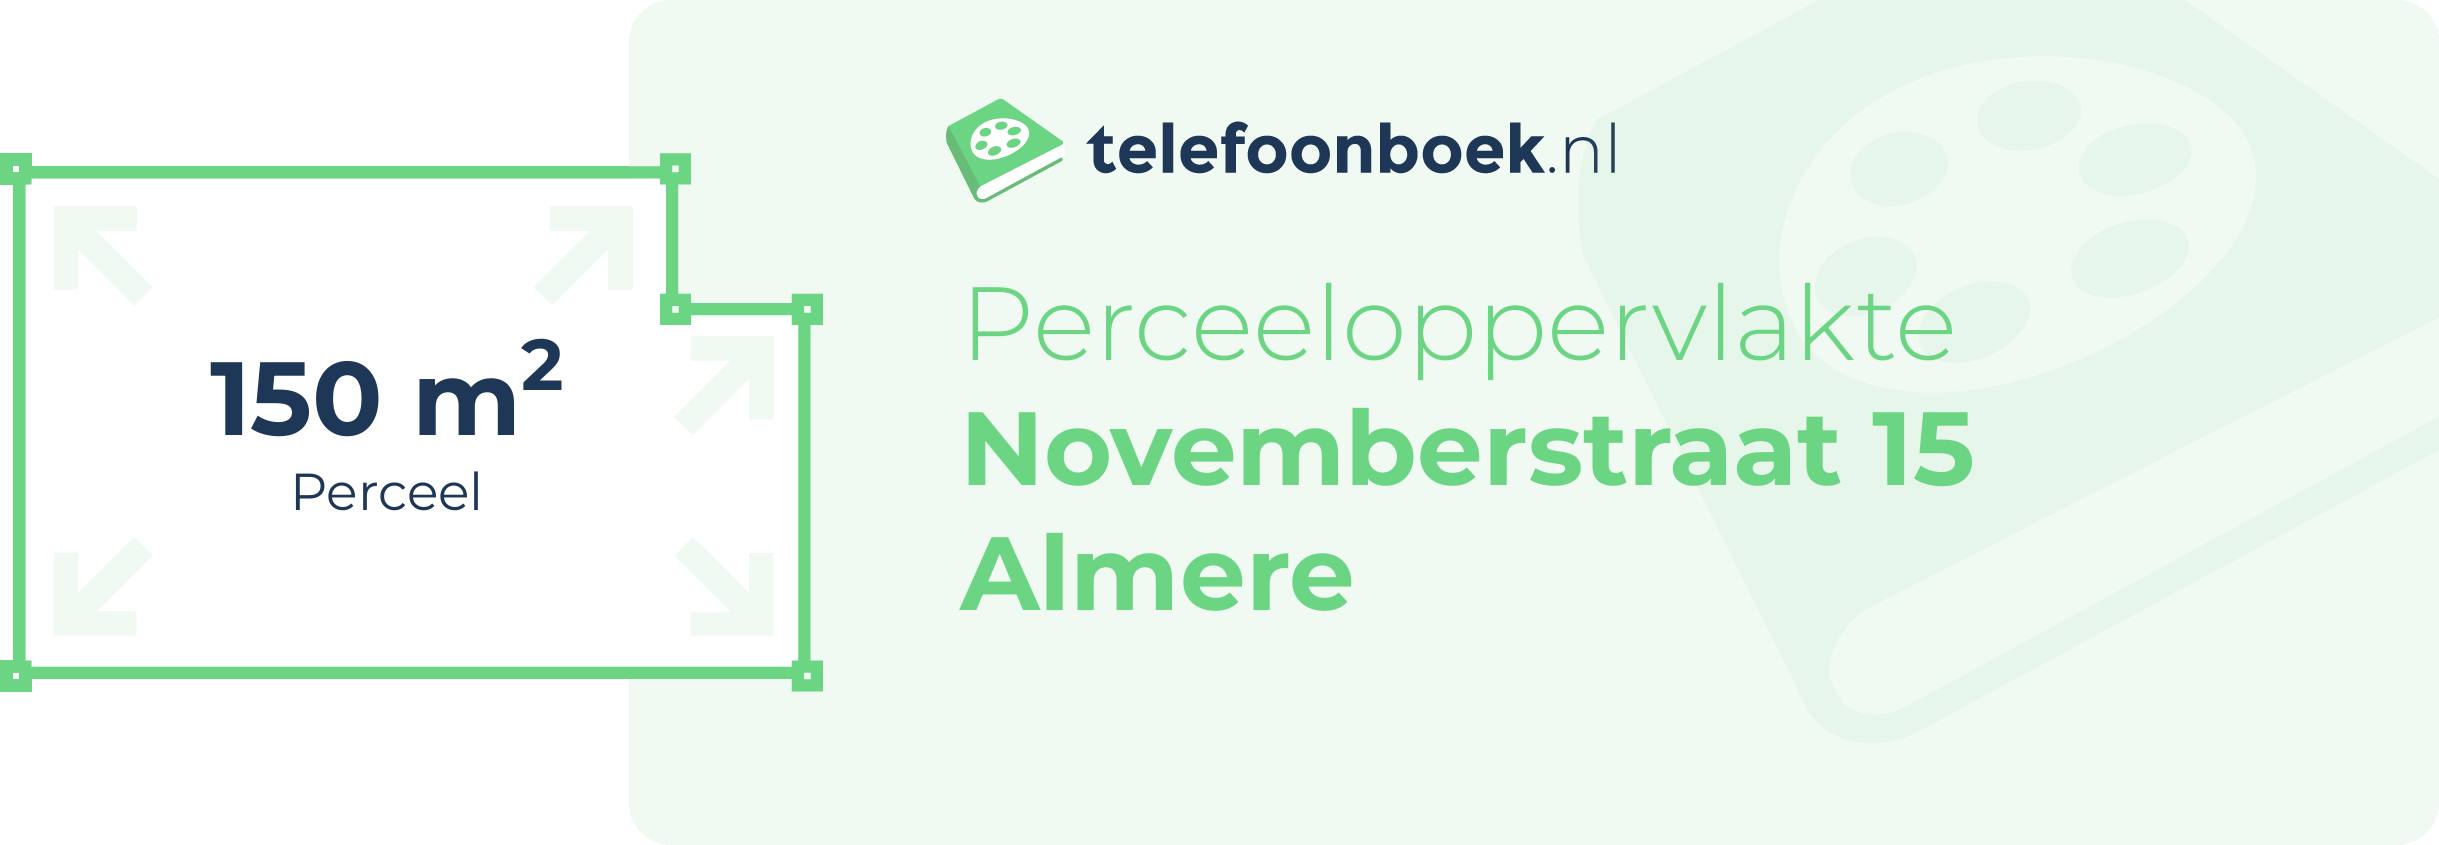 Perceeloppervlakte Novemberstraat 15 Almere